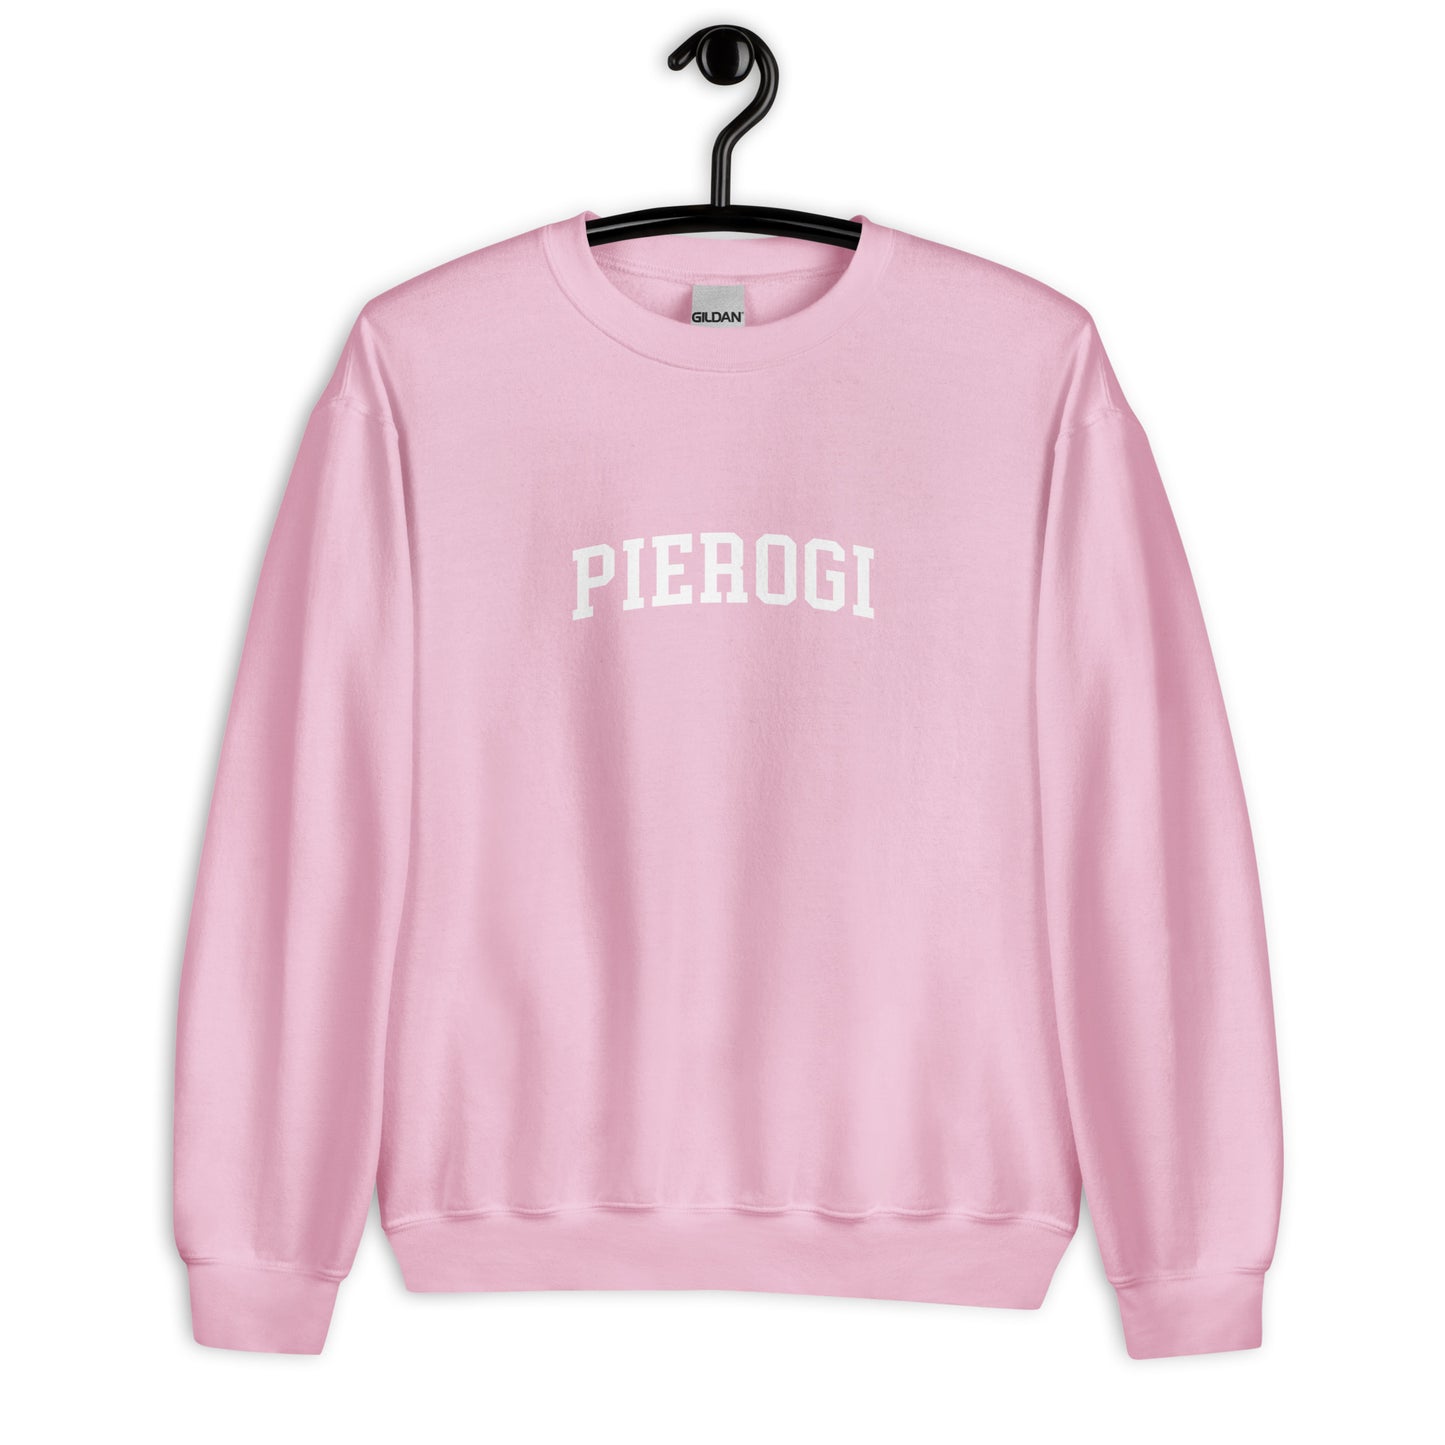 Pierogi Sweatshirt - Arched Font